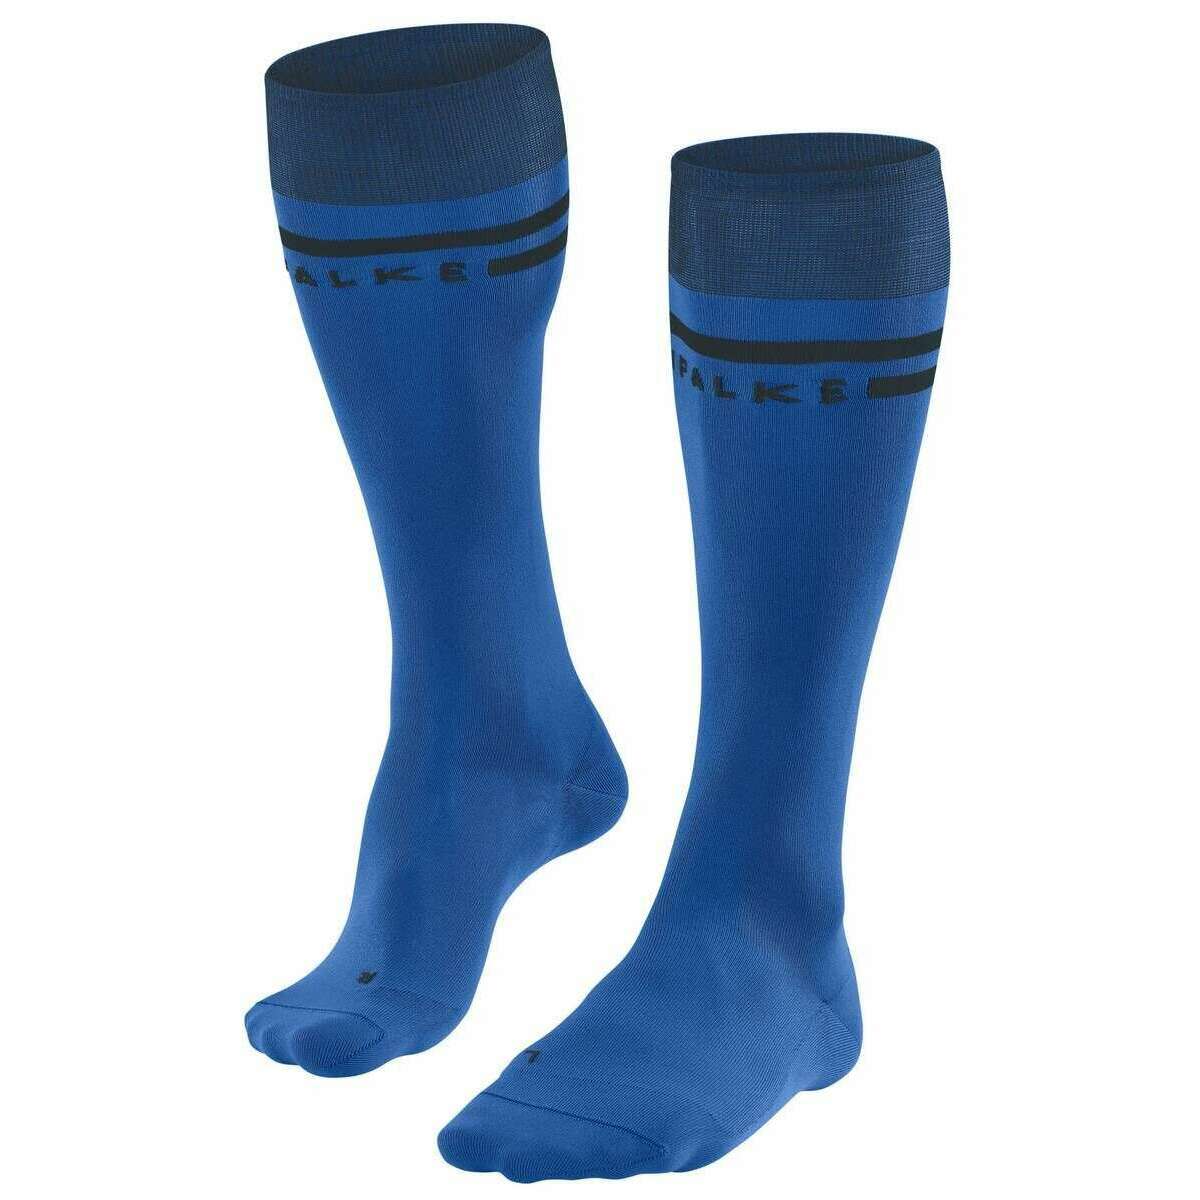 Falke SK7 Race Skiing Knee High Socks - Olympic Blue